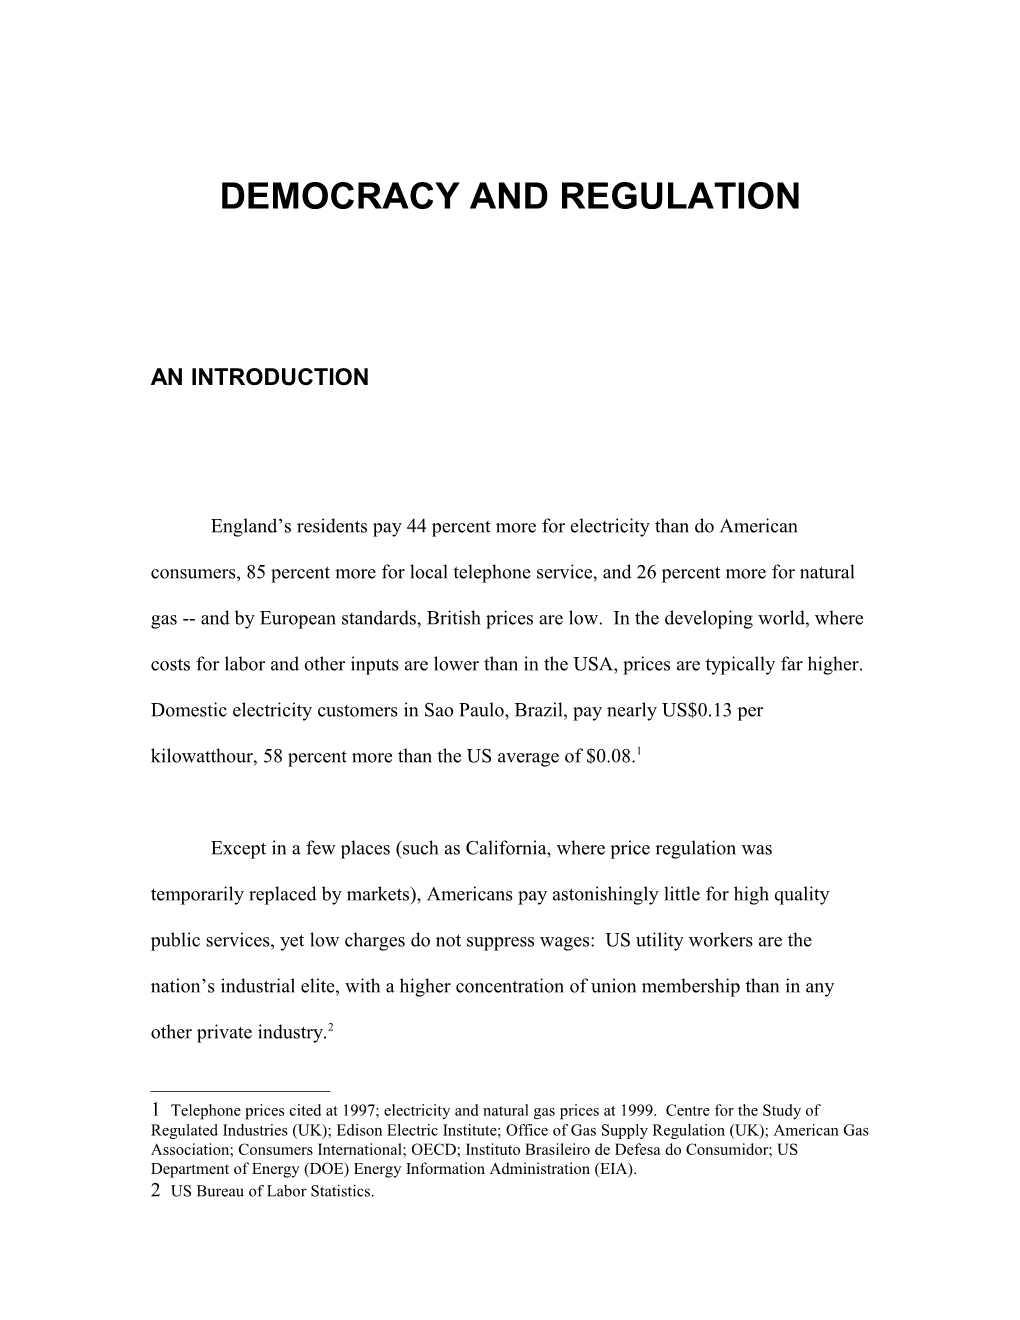 Democracy and Regulation